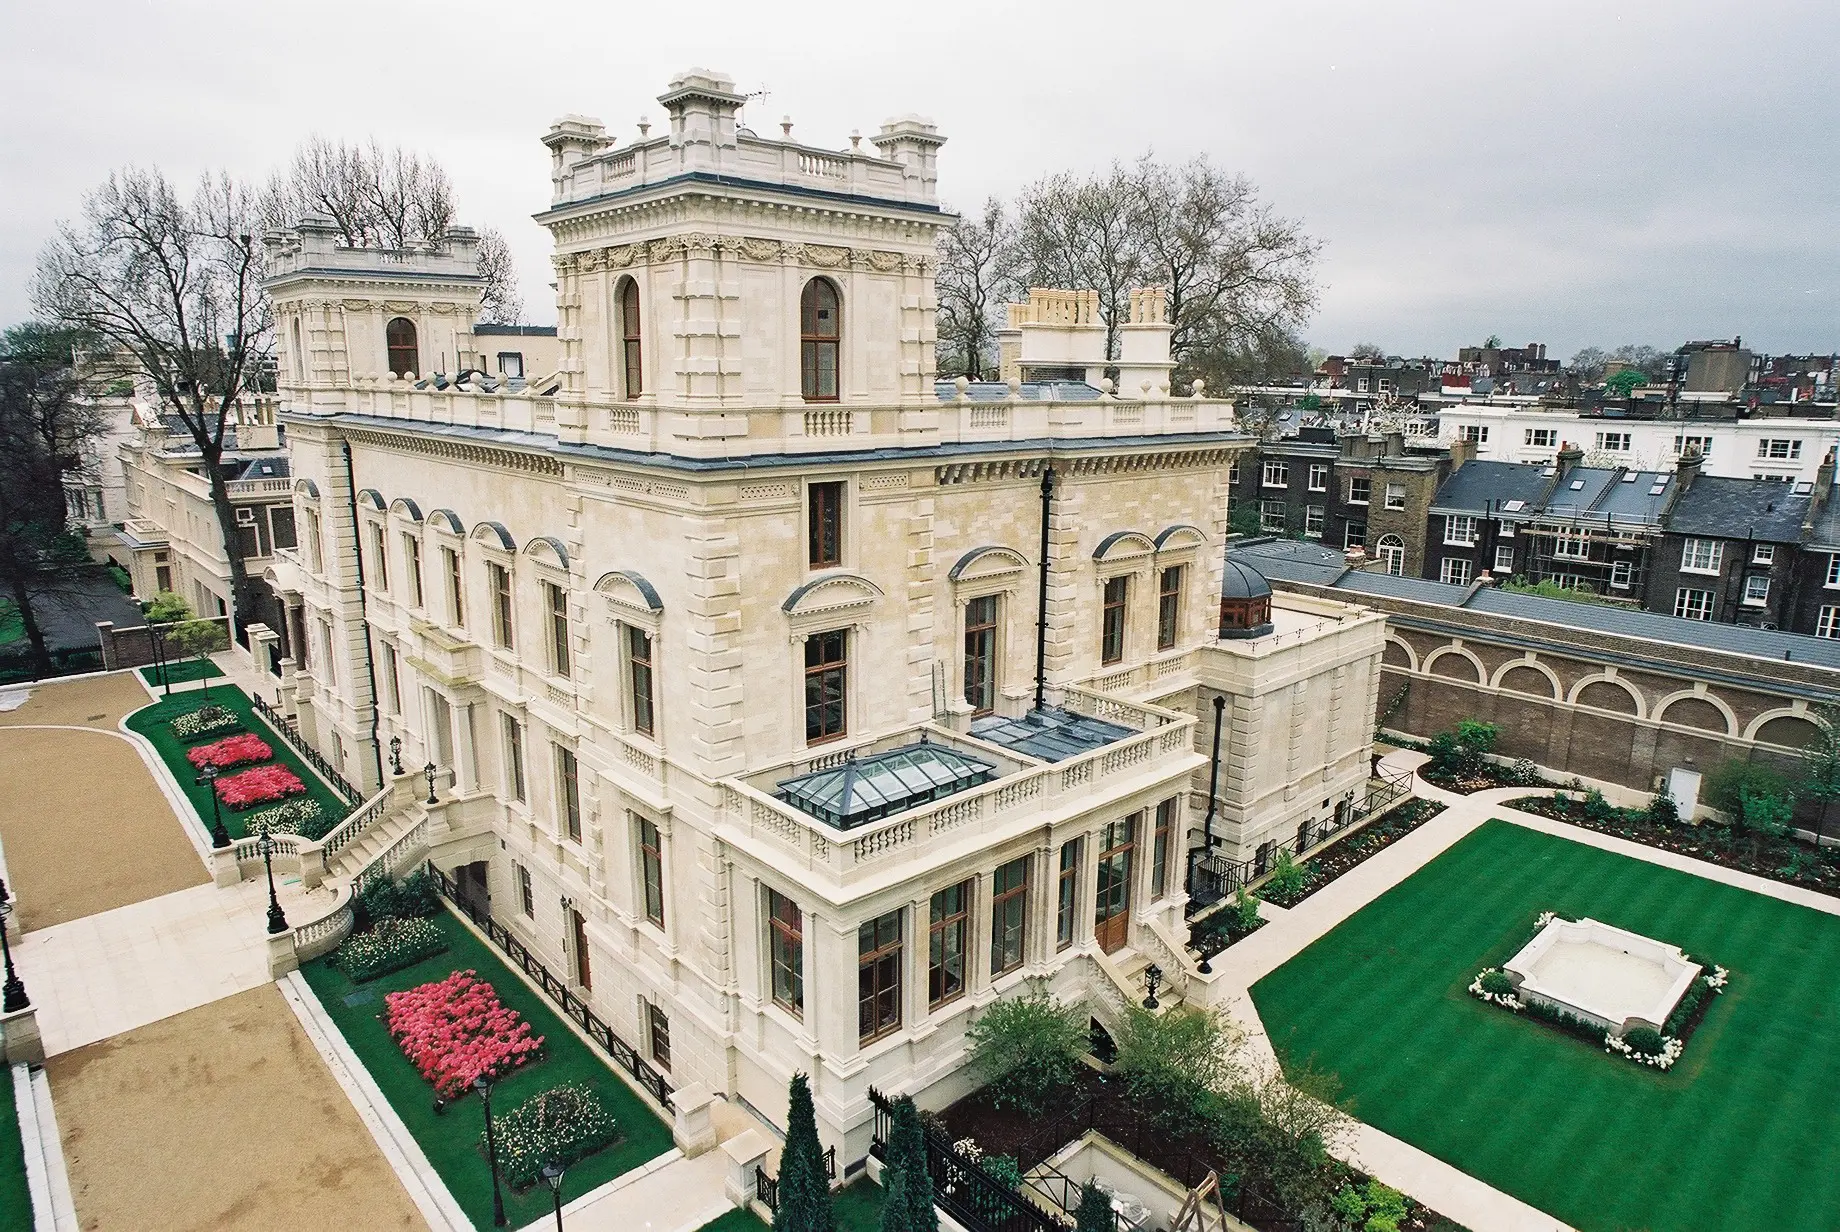 Kensington Palace Gardens: London's most expensive street - HomeViews